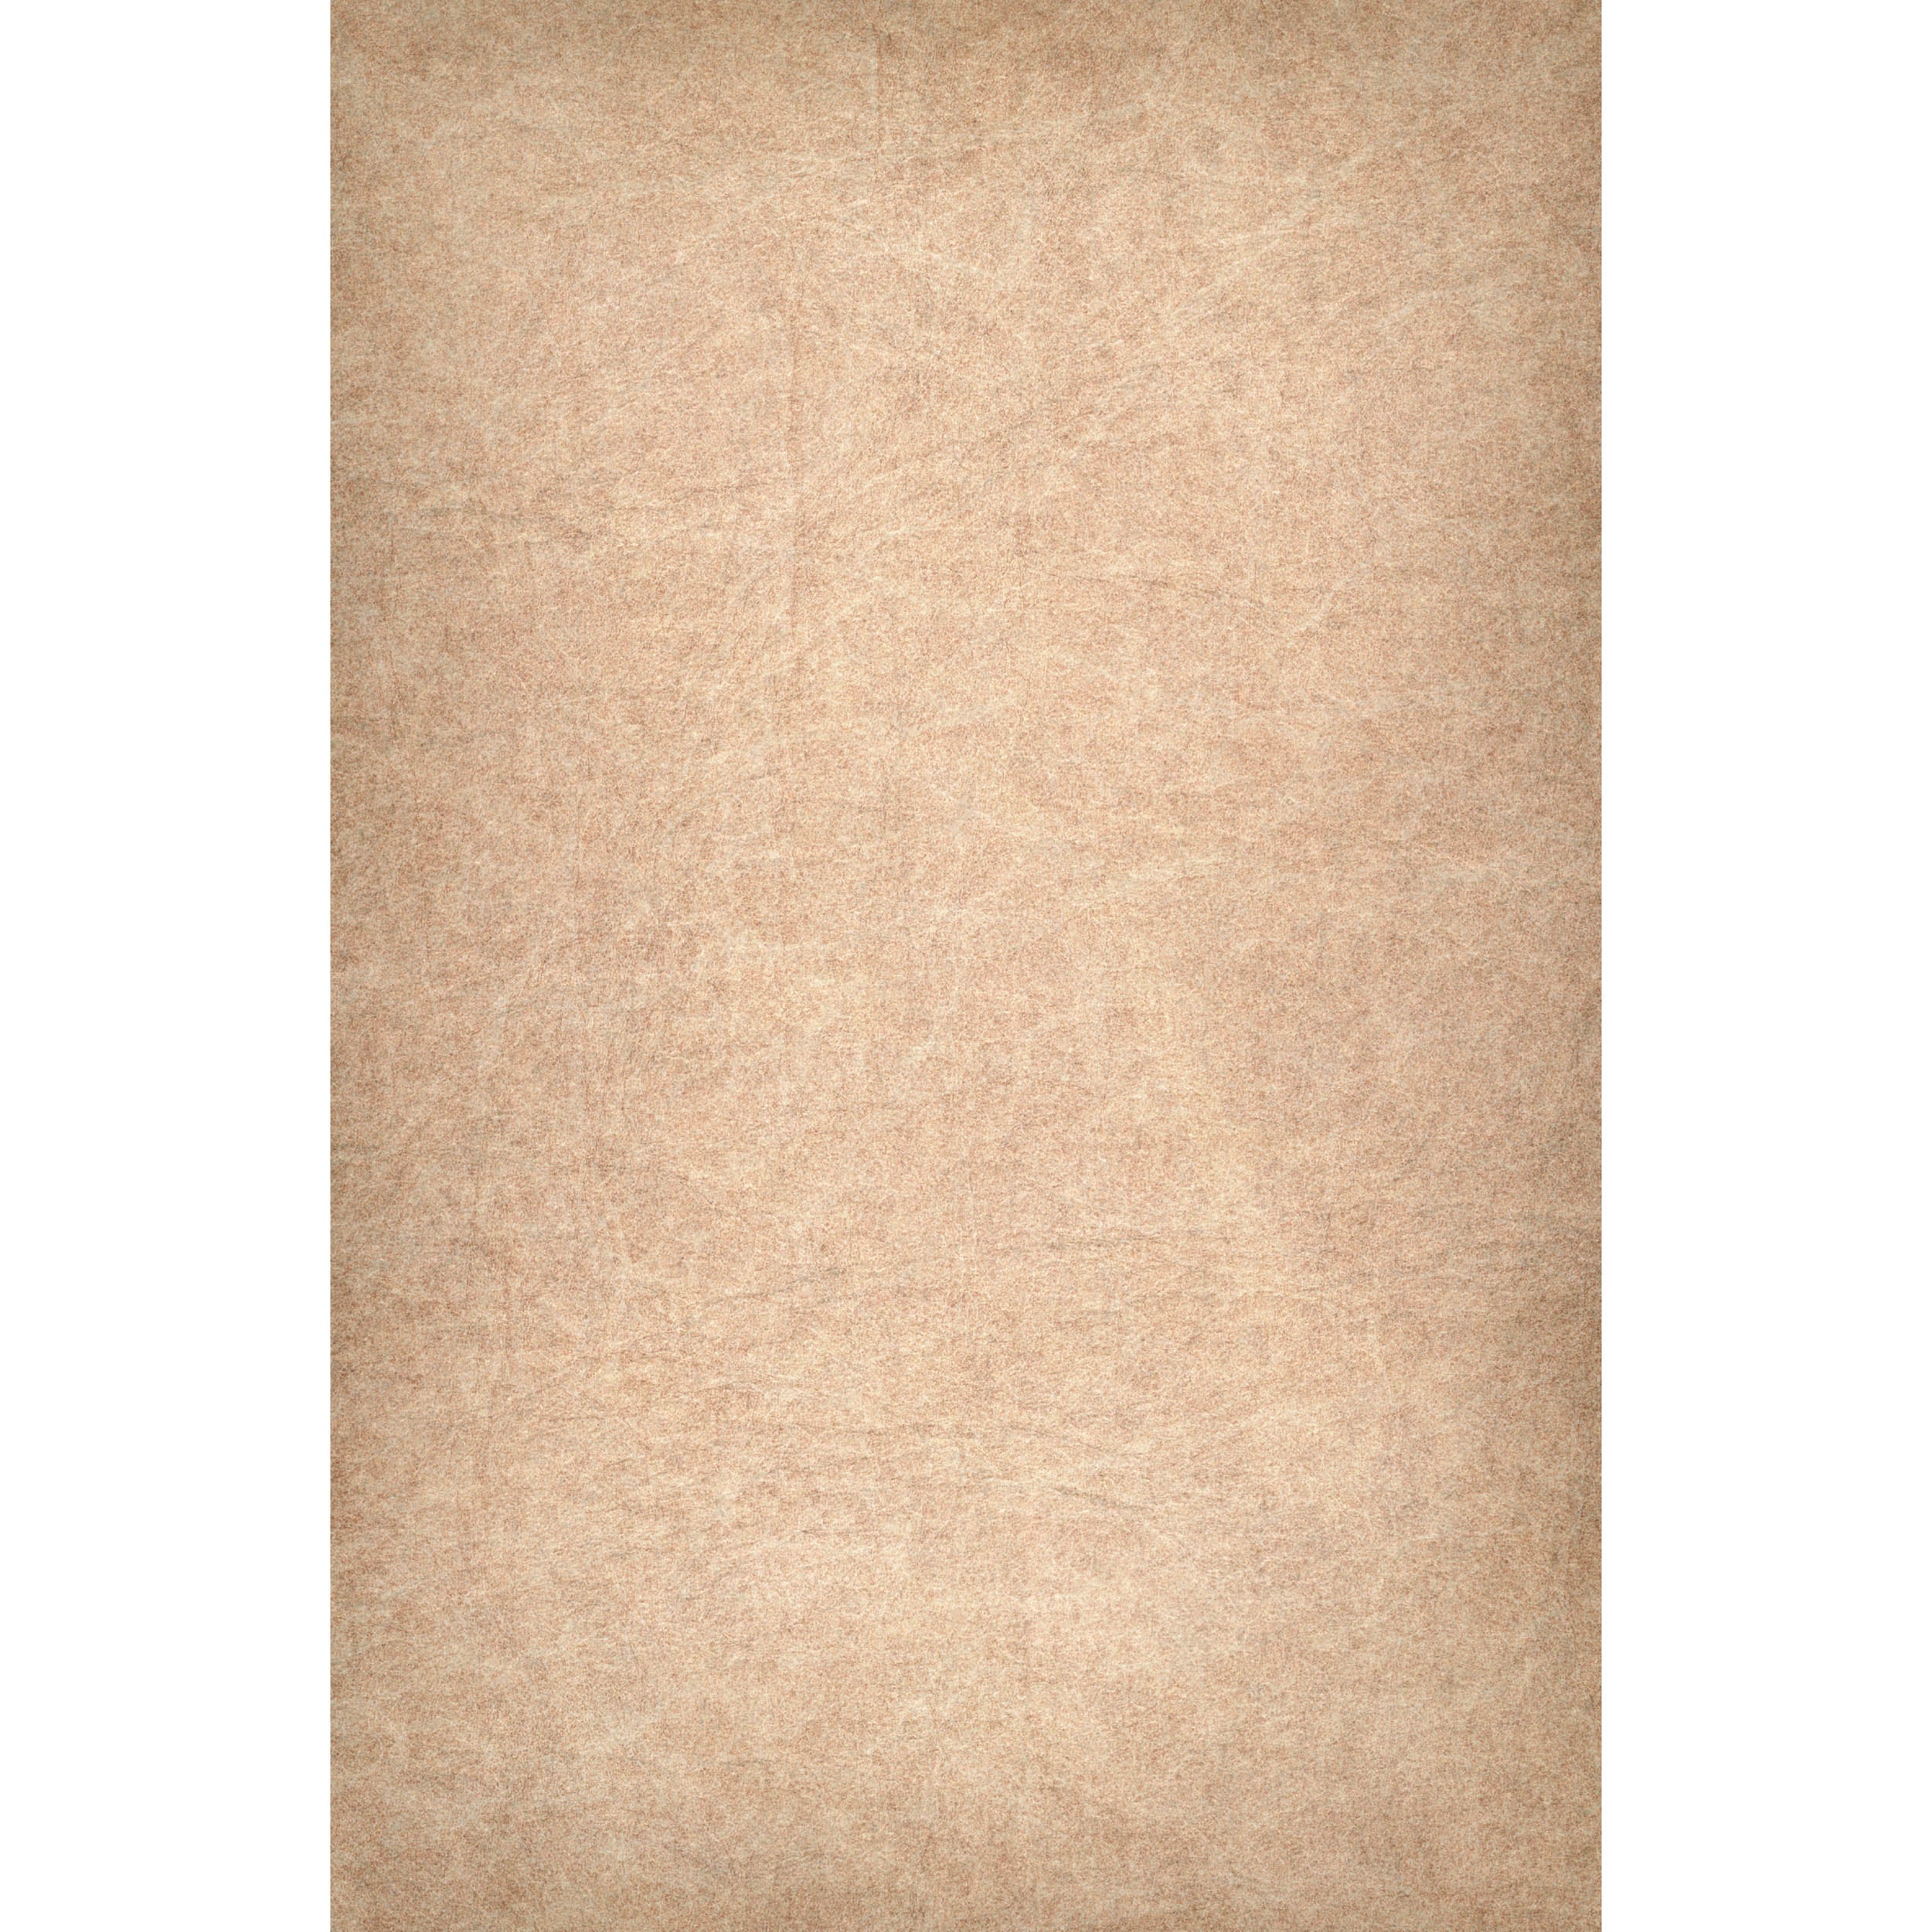 EASIFRAME CURVED C14-Hazelnut Fabric Skin Pattern